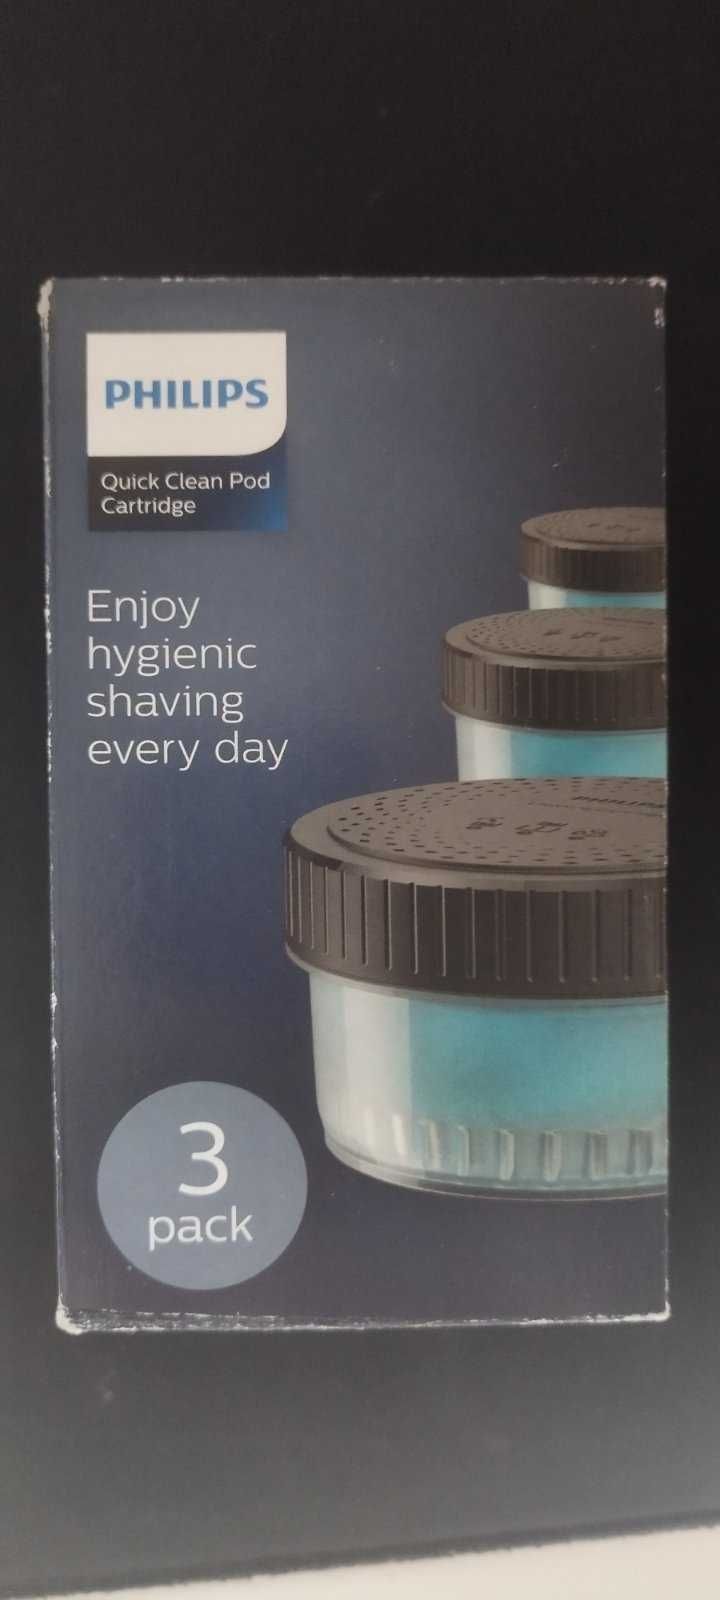 Philips Quick clean Pod Cartridge